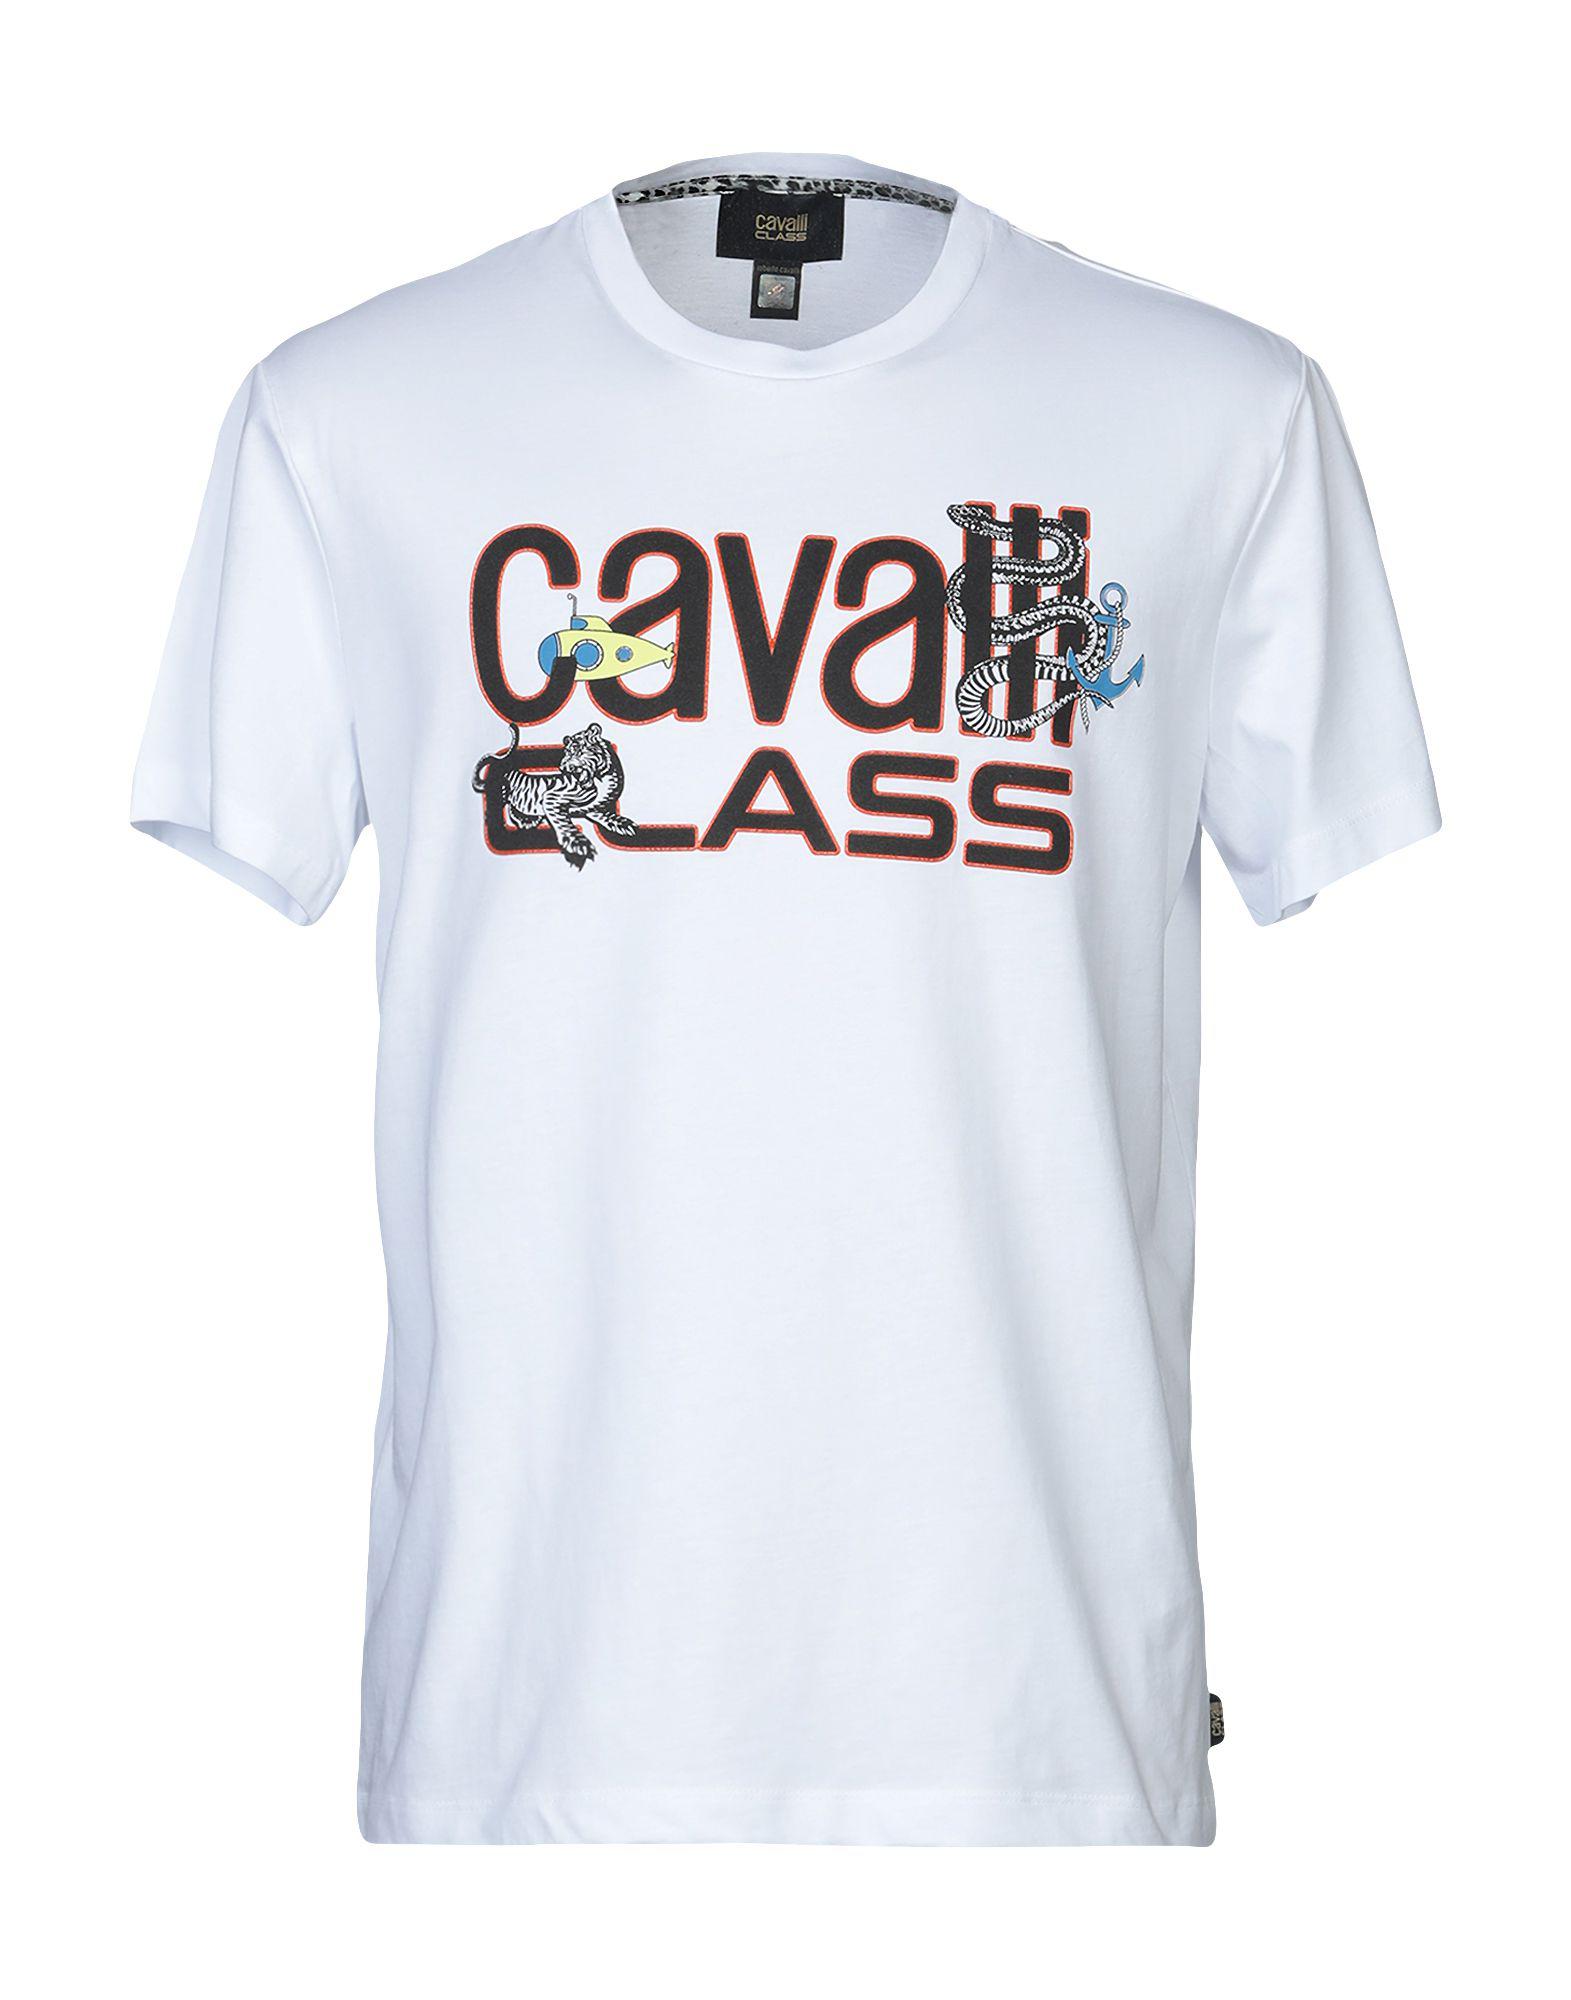 Class Roberto Cavalli T-shirt in White for Men - Lyst